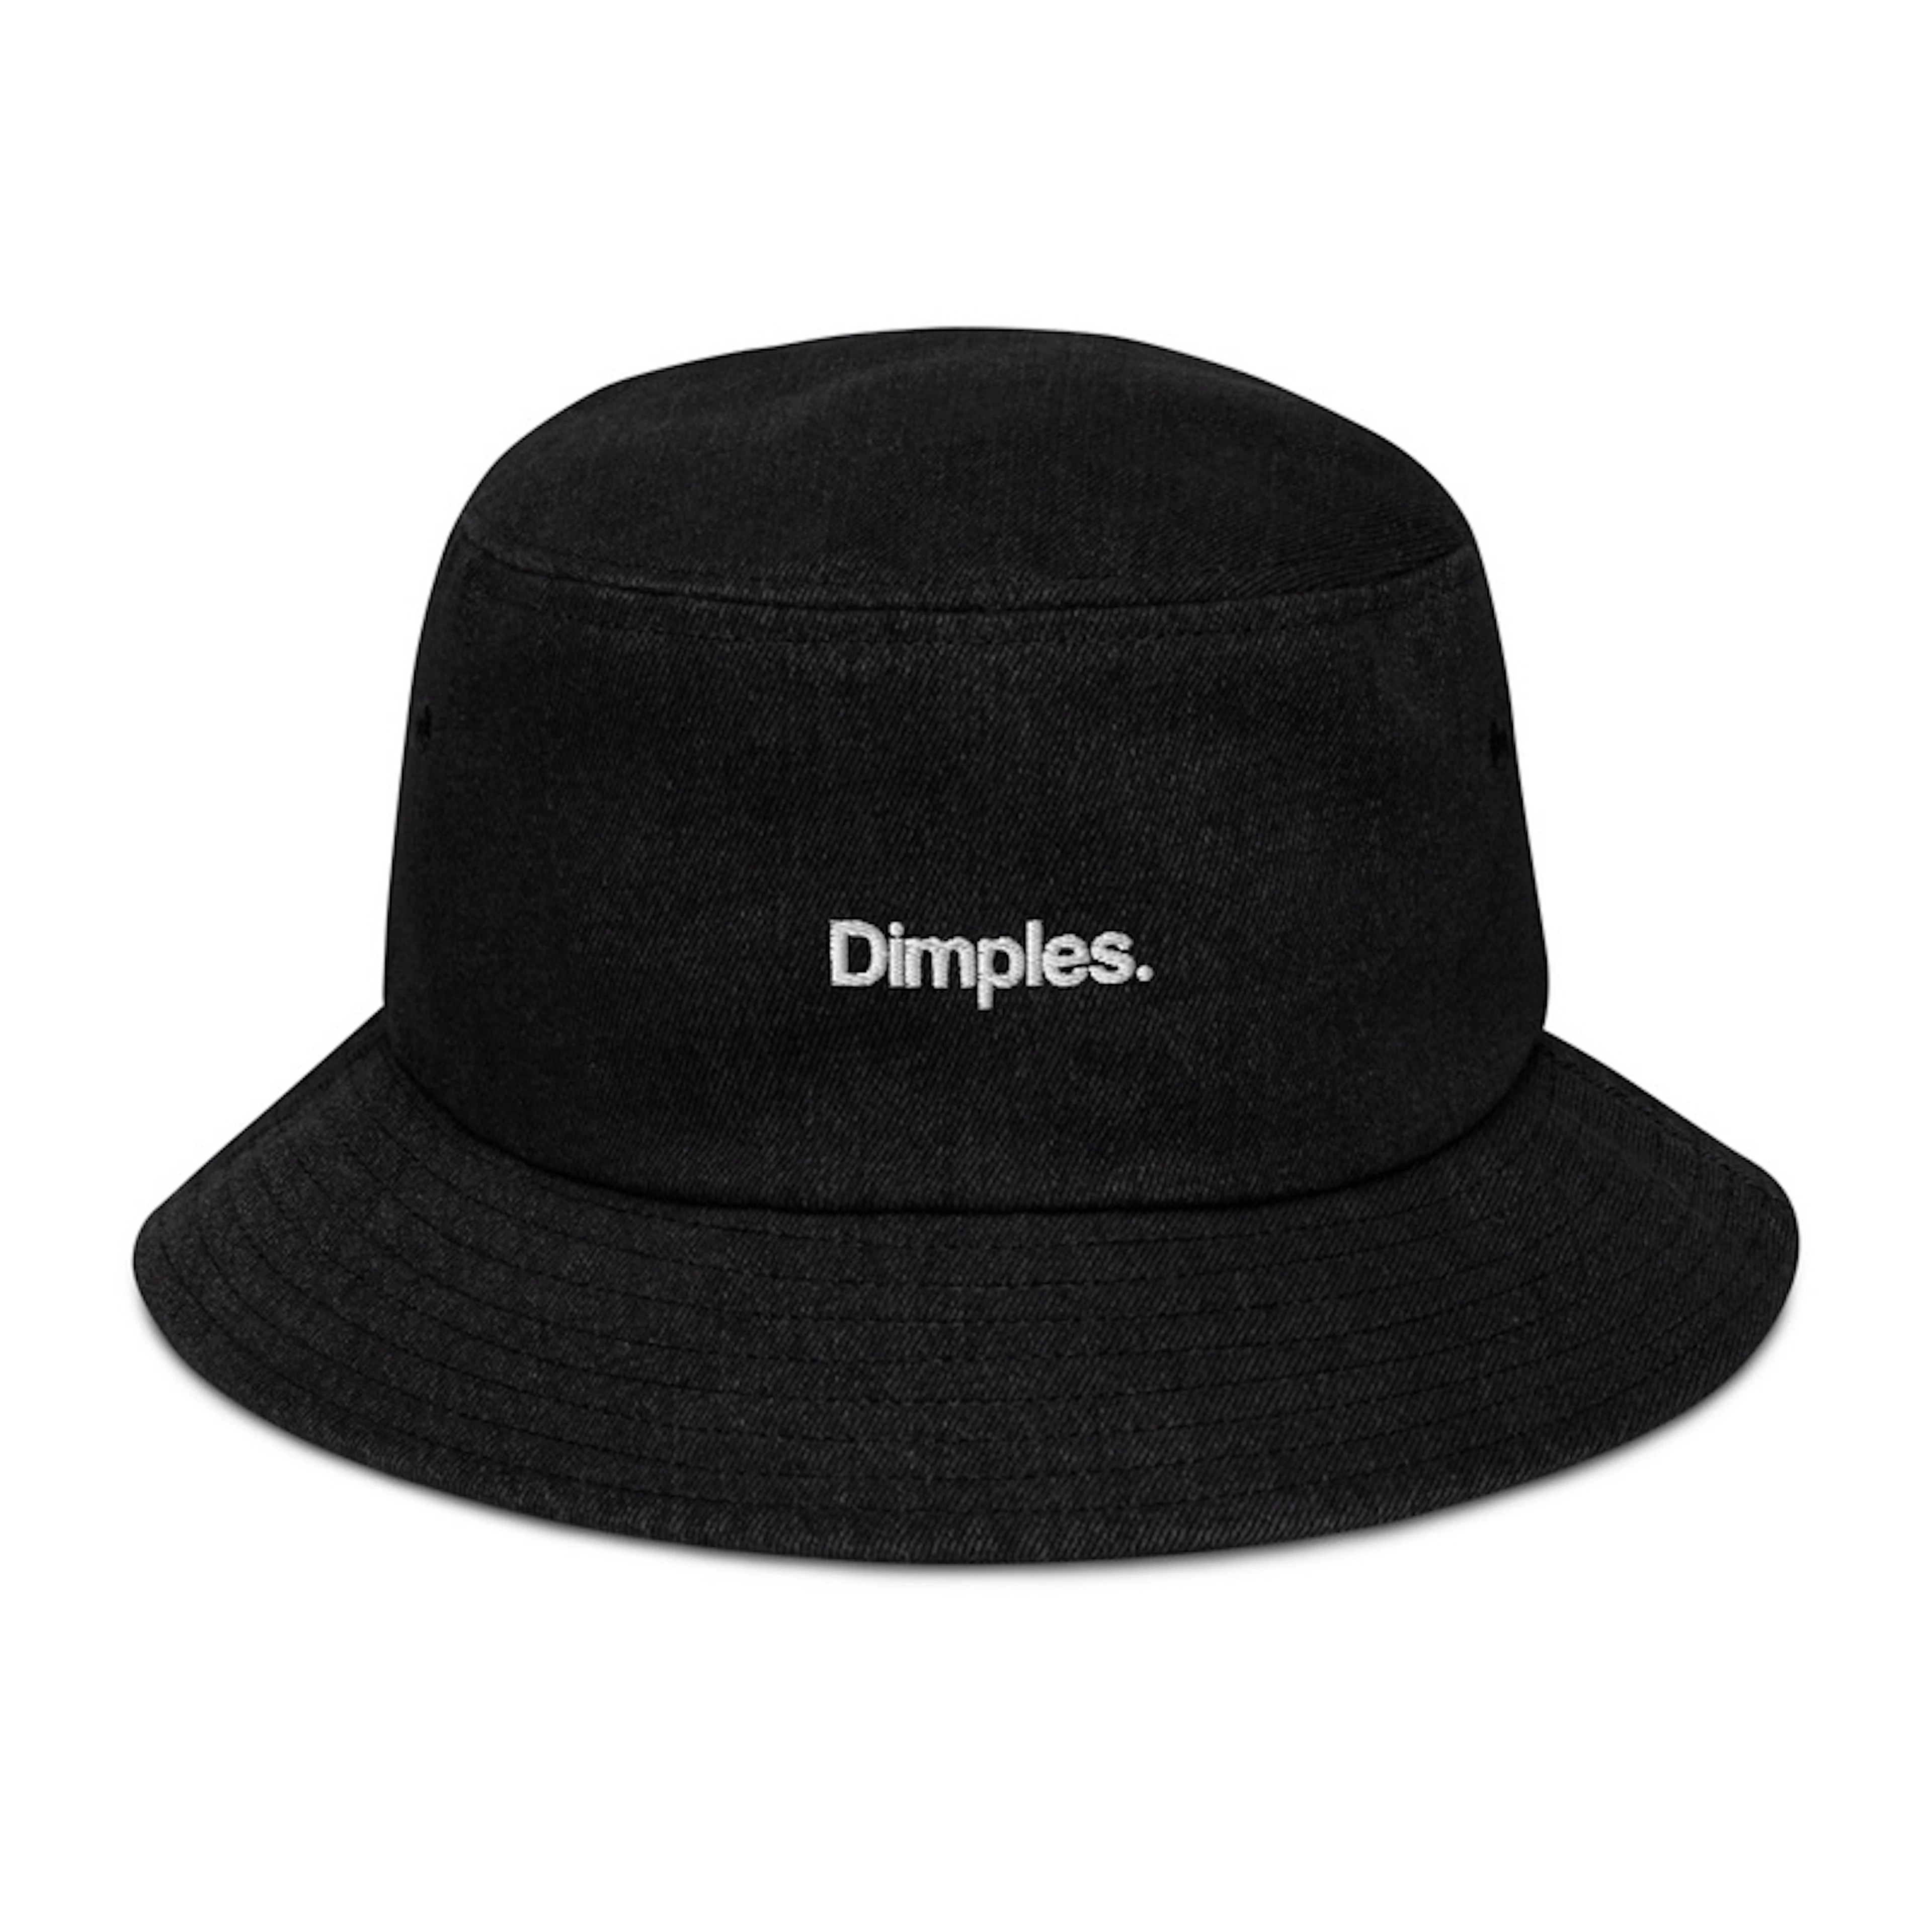 Dimples Bucket Hat